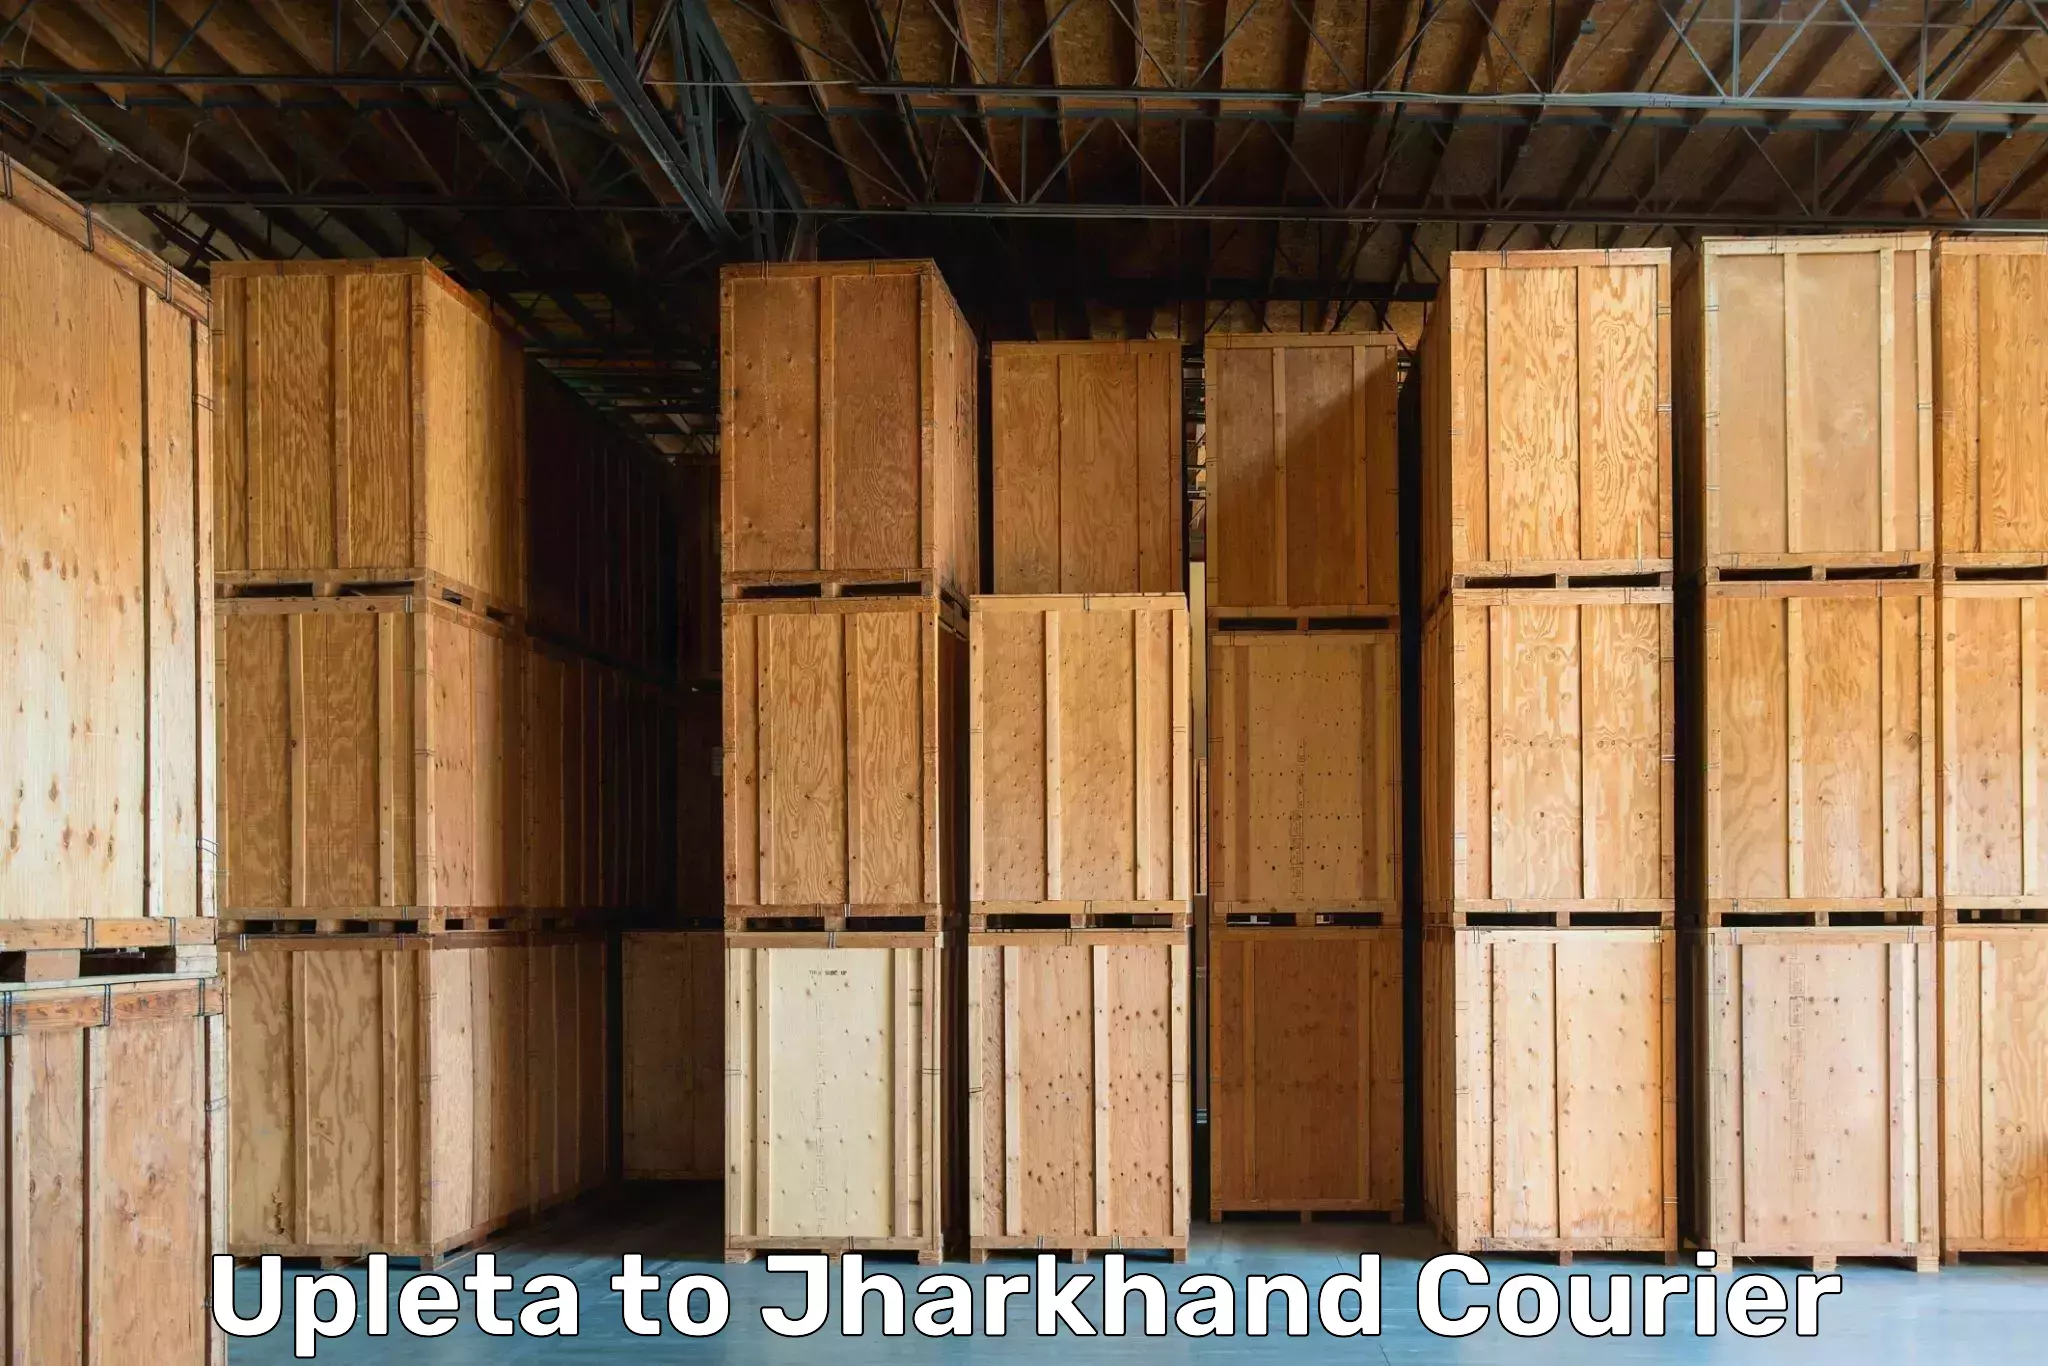 Moving and packing experts Upleta to Shikaripara